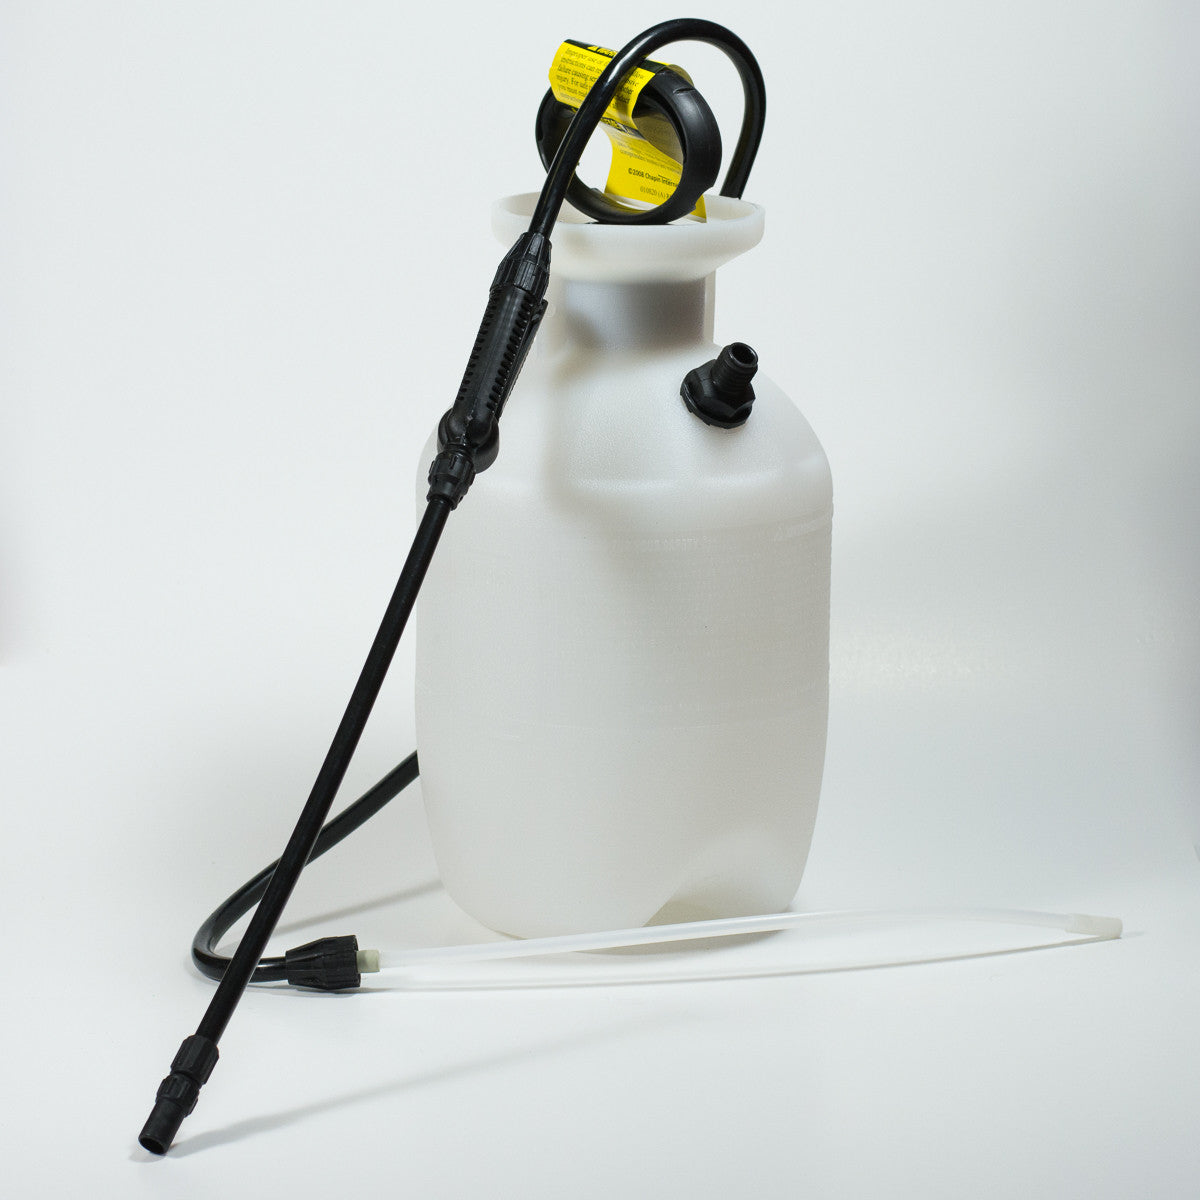 Chapin Lawn & Garden Plastic Sprayer - 1 Gal.